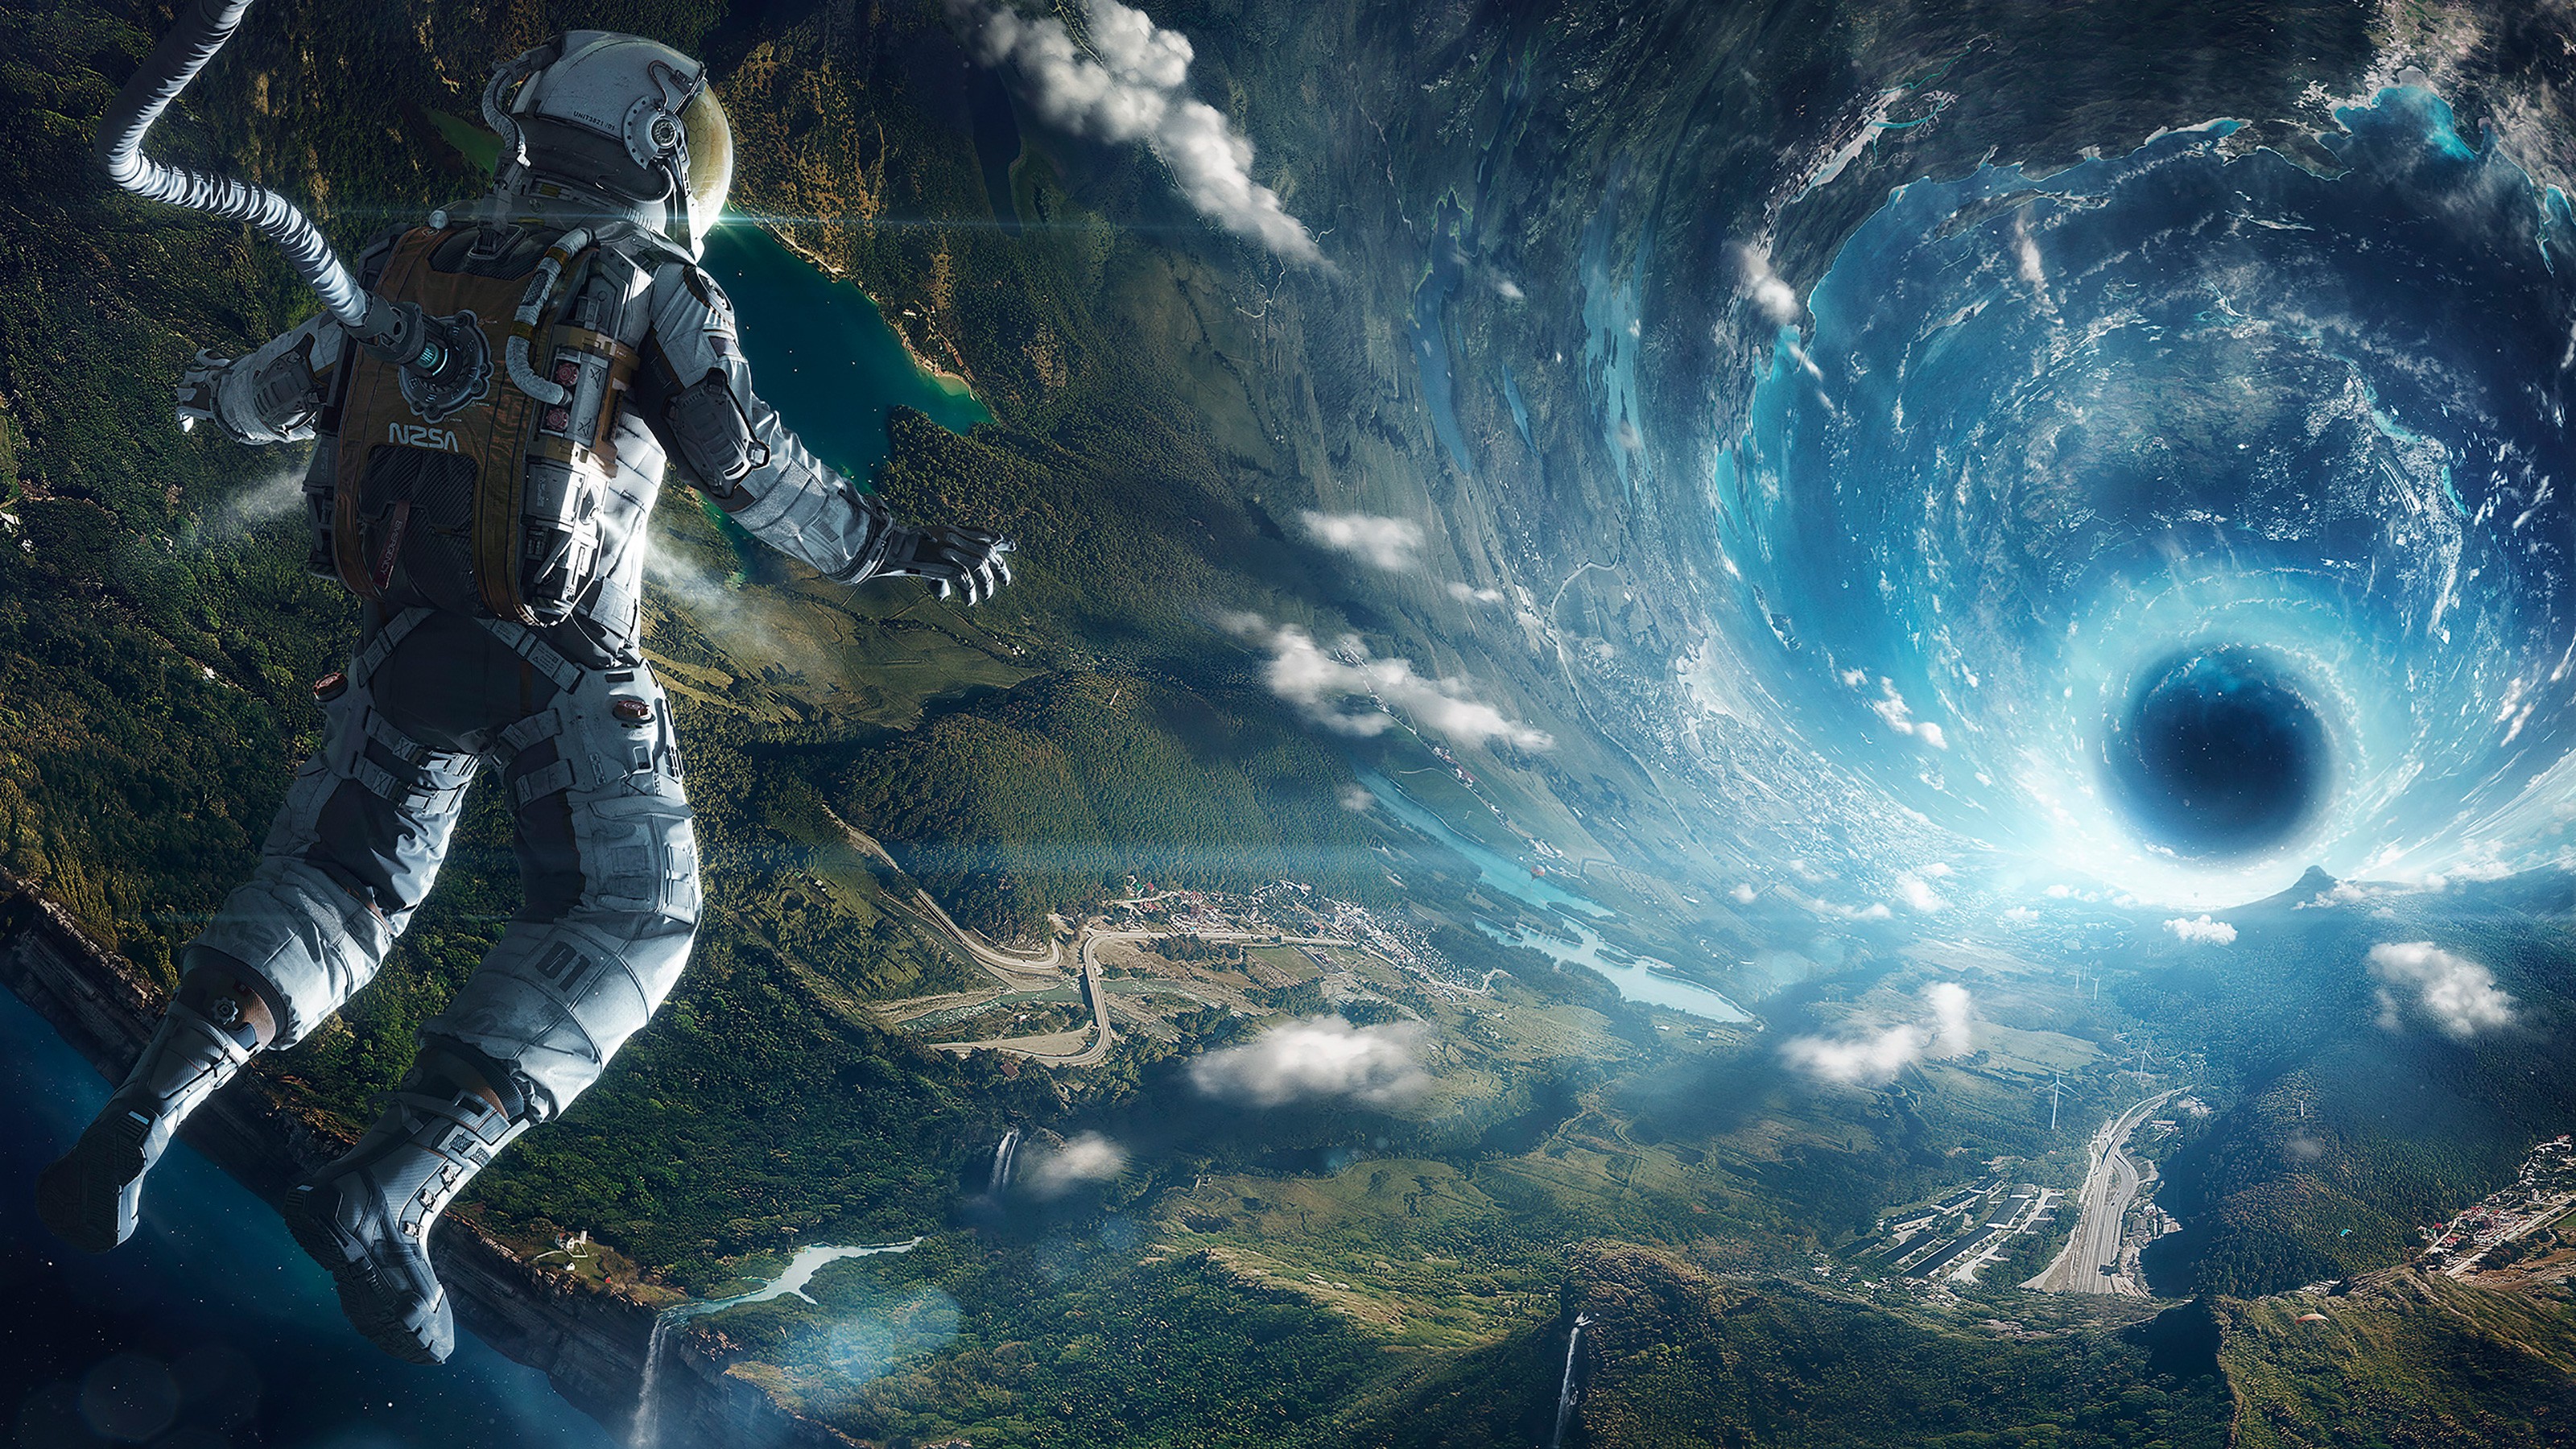 General 3200x1800 artificial gravity digital art astronaut landscape clouds nature forest stars futuristic tunnel wormholes black holes